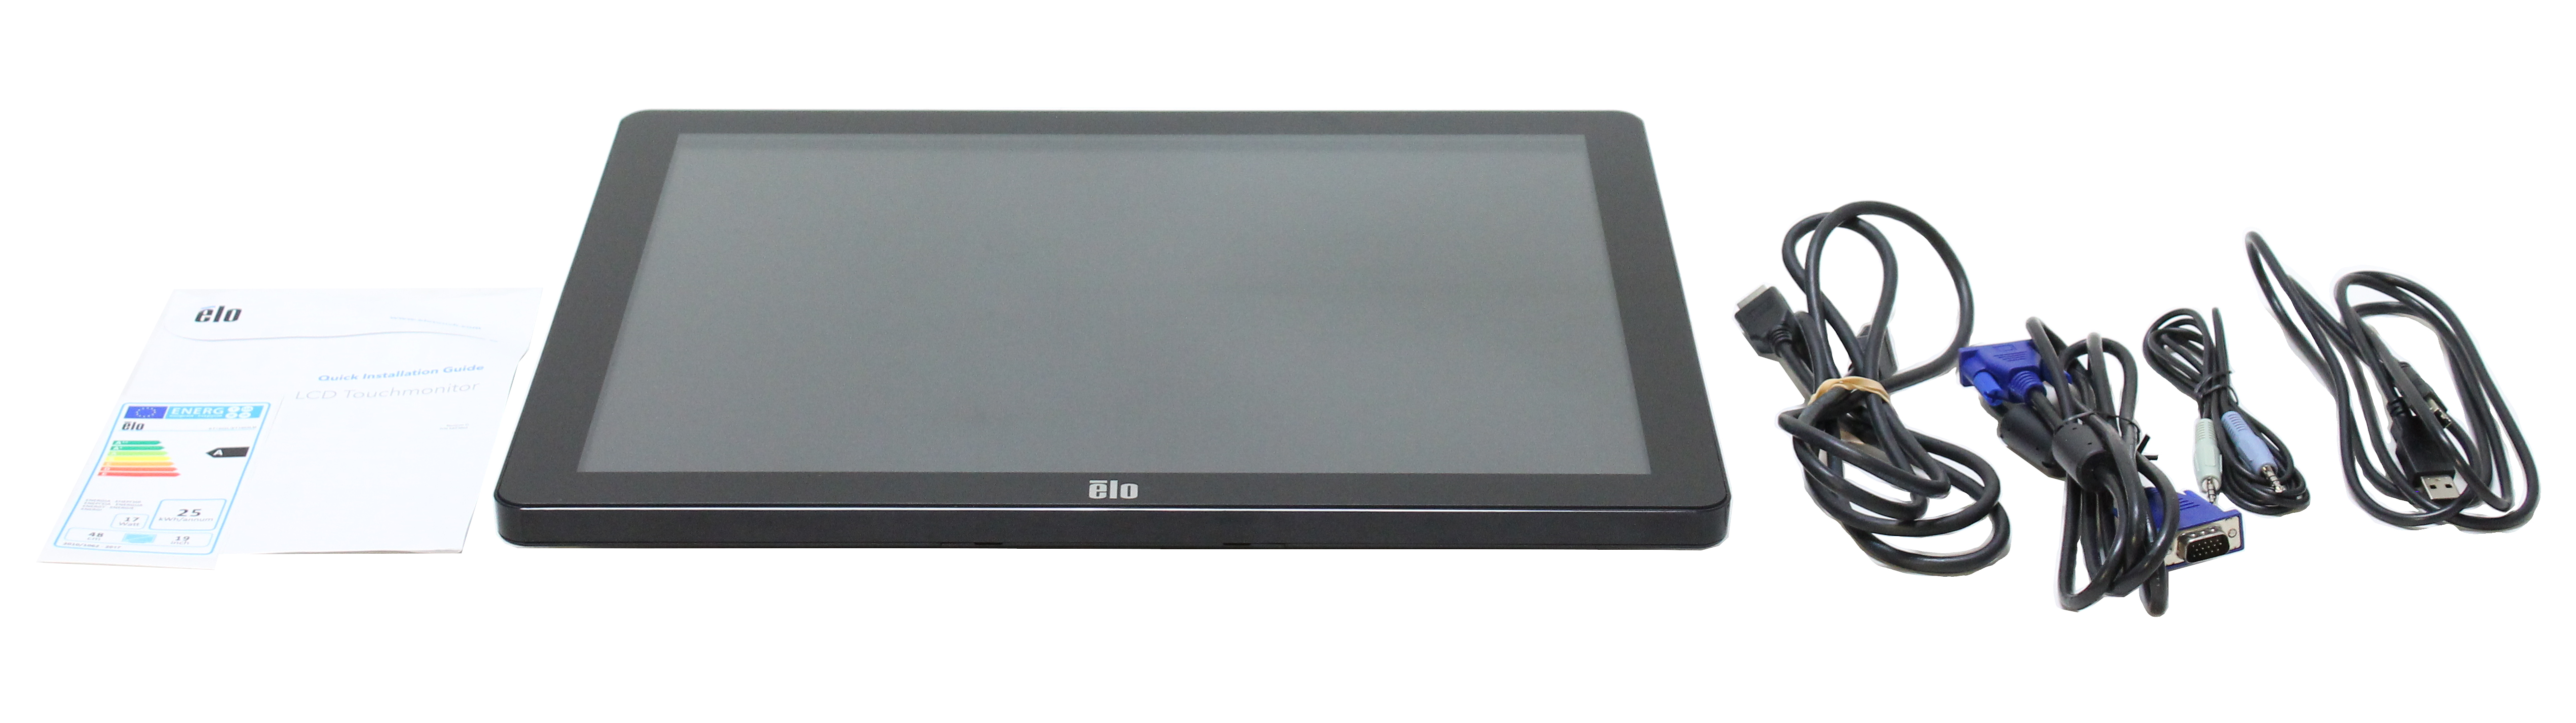 Elo 1903LM LCD Monitor Black 19" Touchscreen E349829